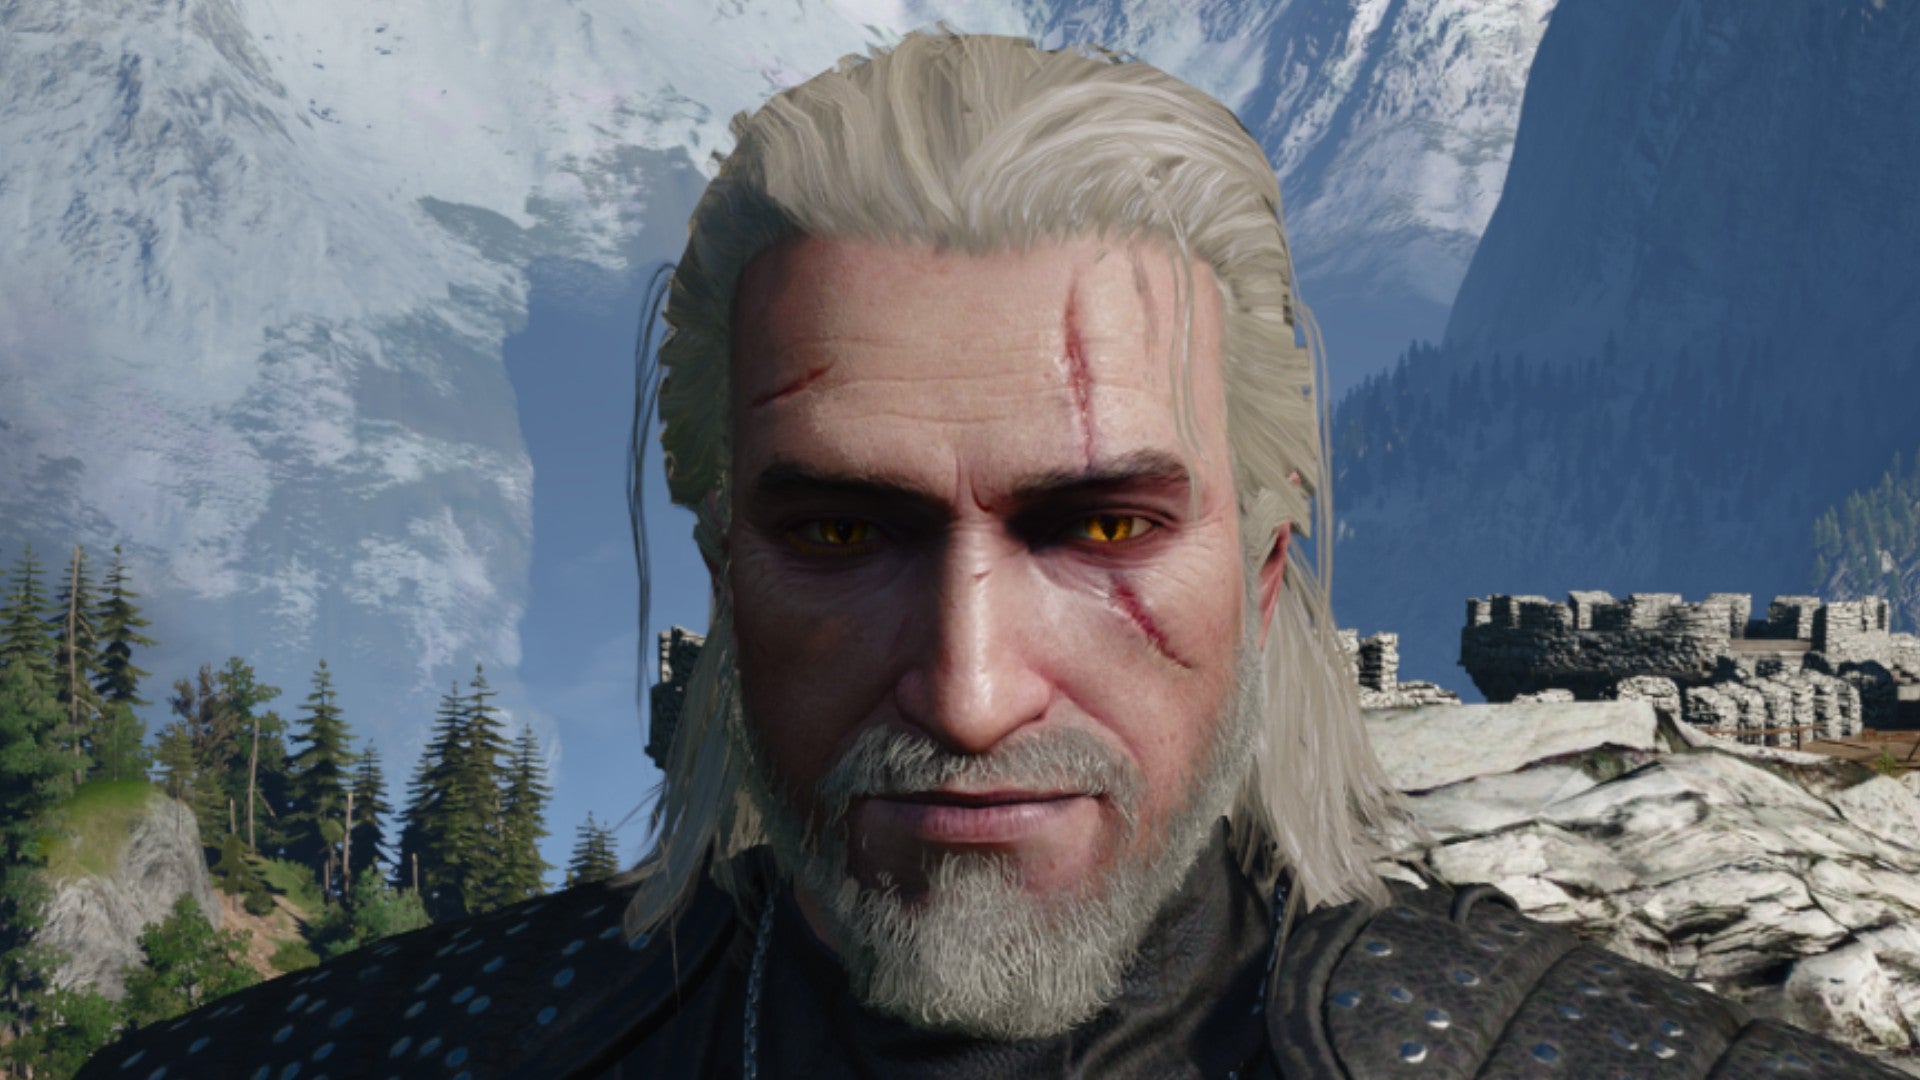 Imagen de Witcher 3 que muestra a Geralt con barba completa.